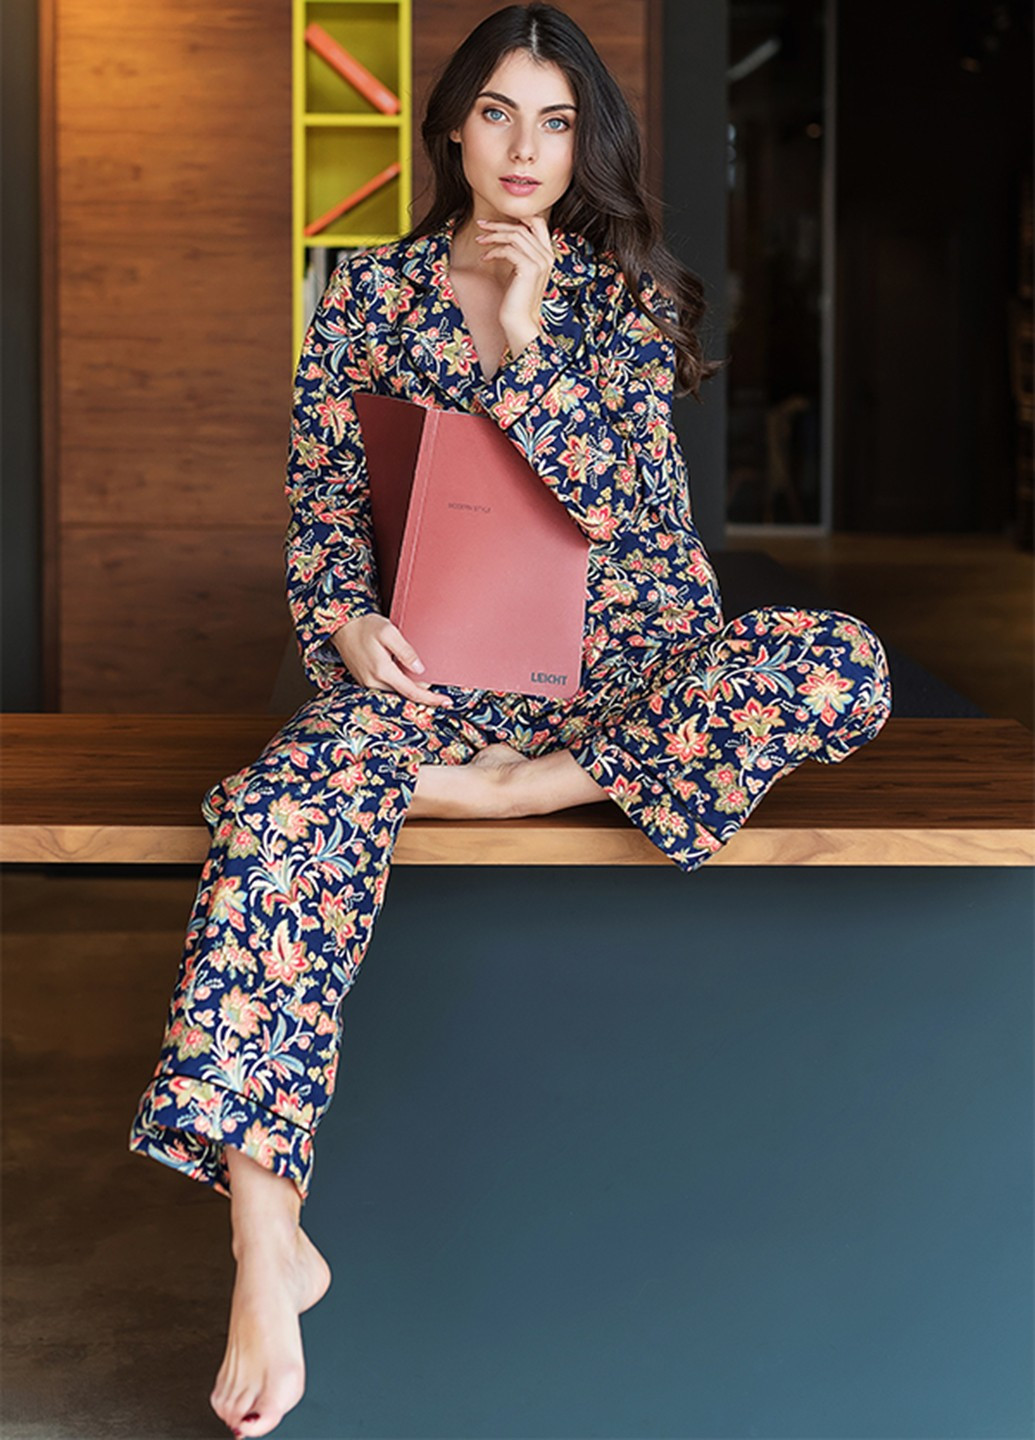 Комбинированная всесезон пижама (рубашка, брюки) реглан + брюки Forly